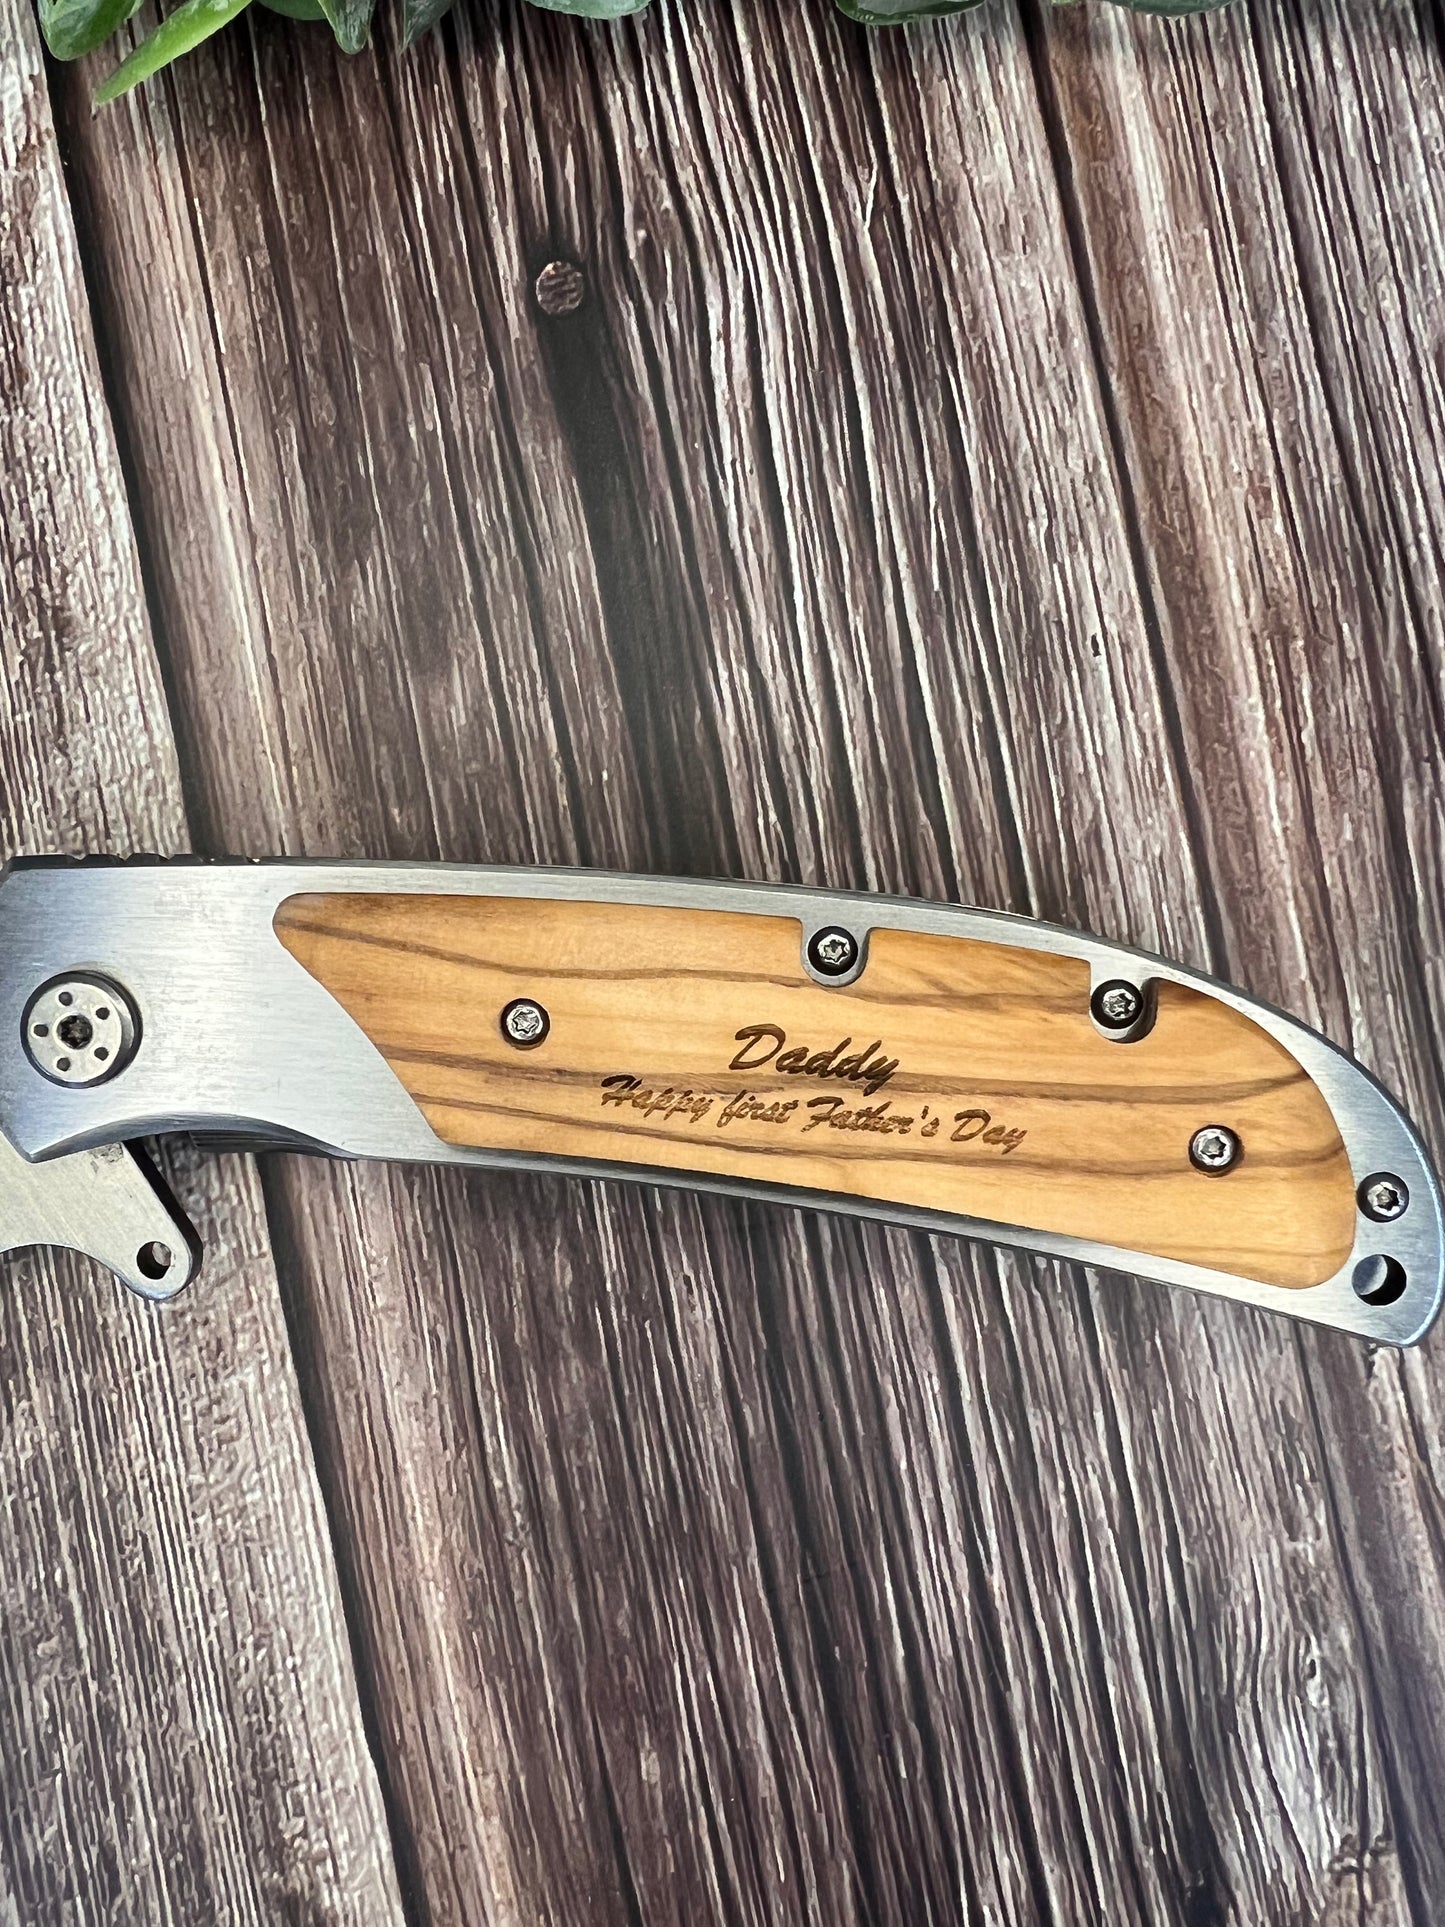 Engraved wooden handle knife